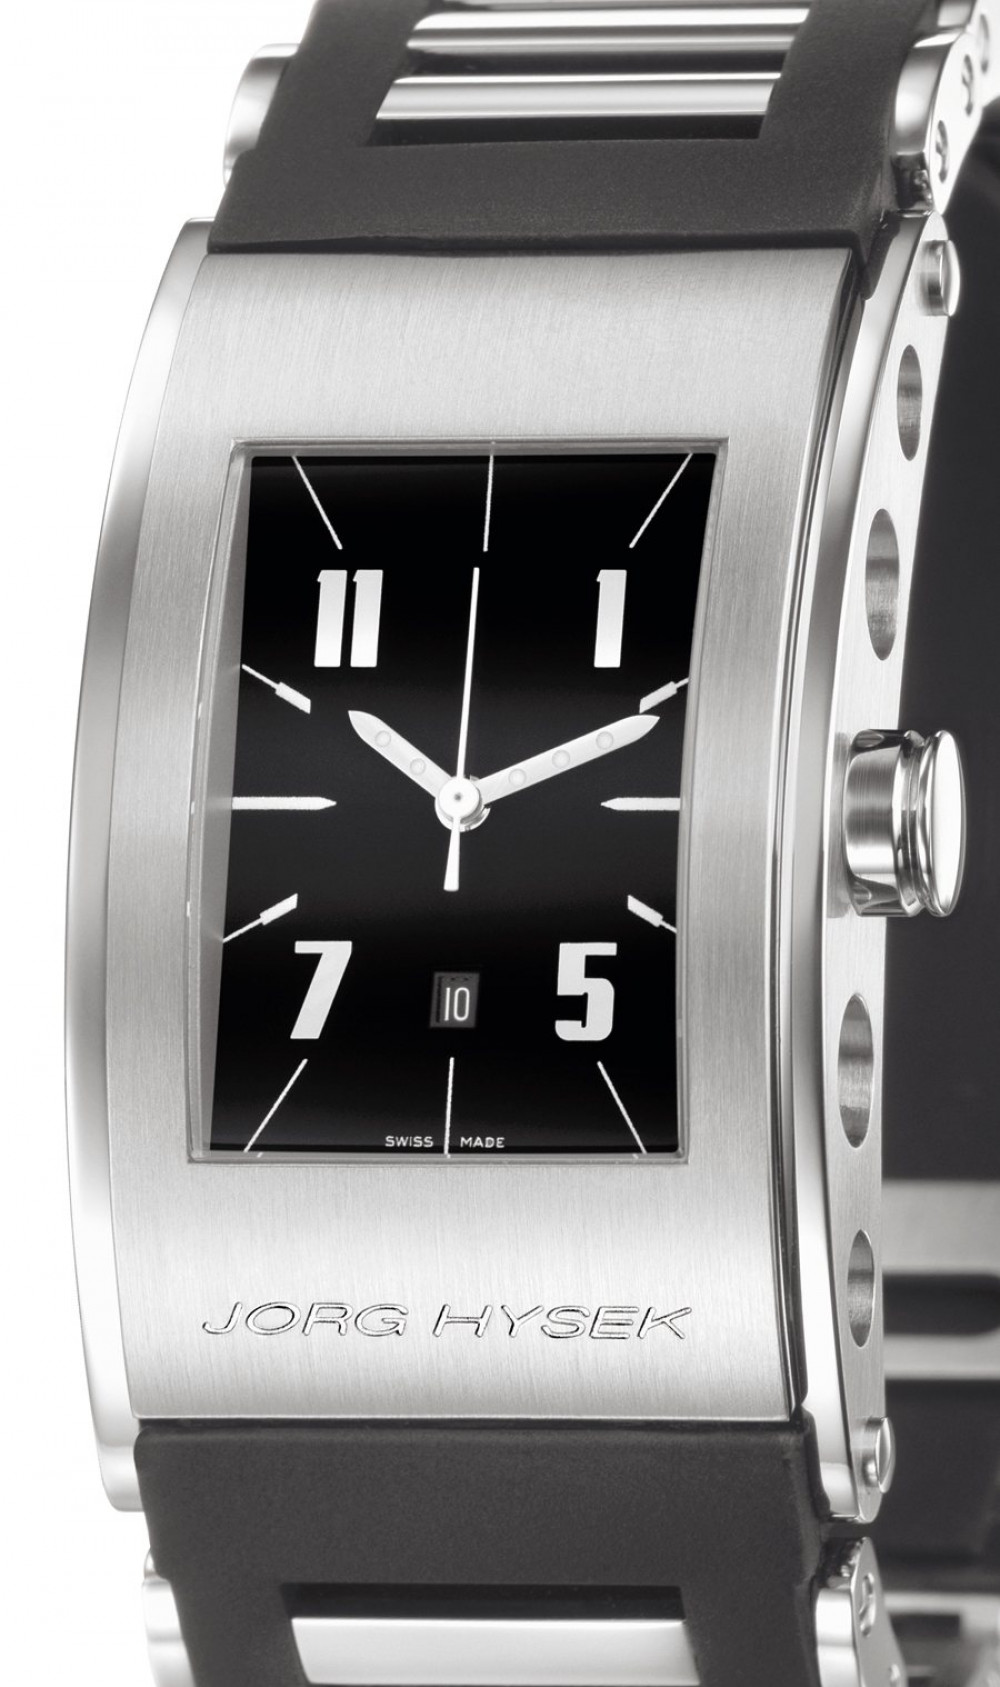 Zegarek firmy Hysek, model Kilada Large